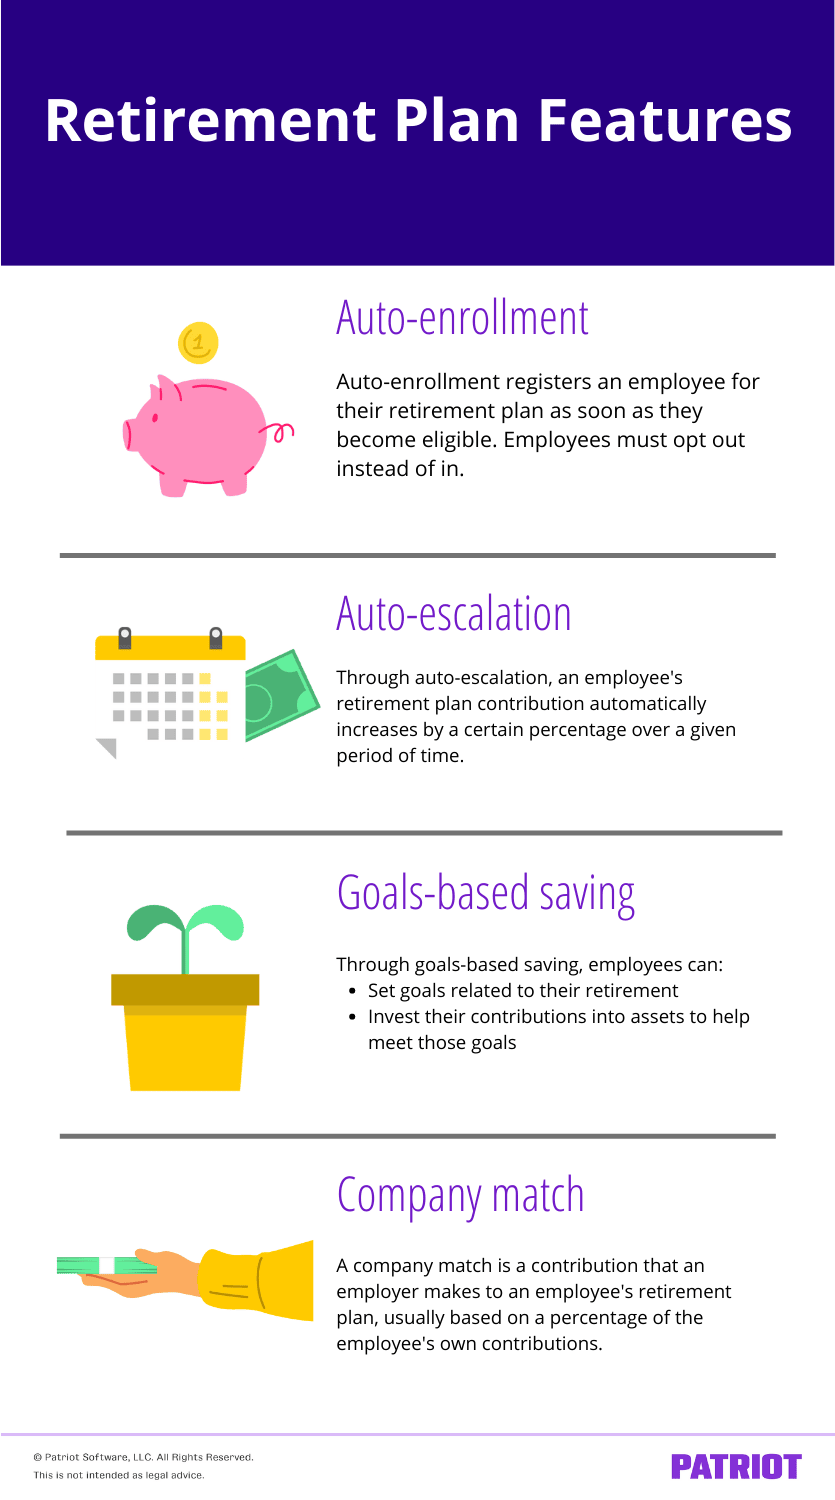 retirement plan features: 1) auto-enrollment 2) auto-escalation 3) goals-based saving 4) company match